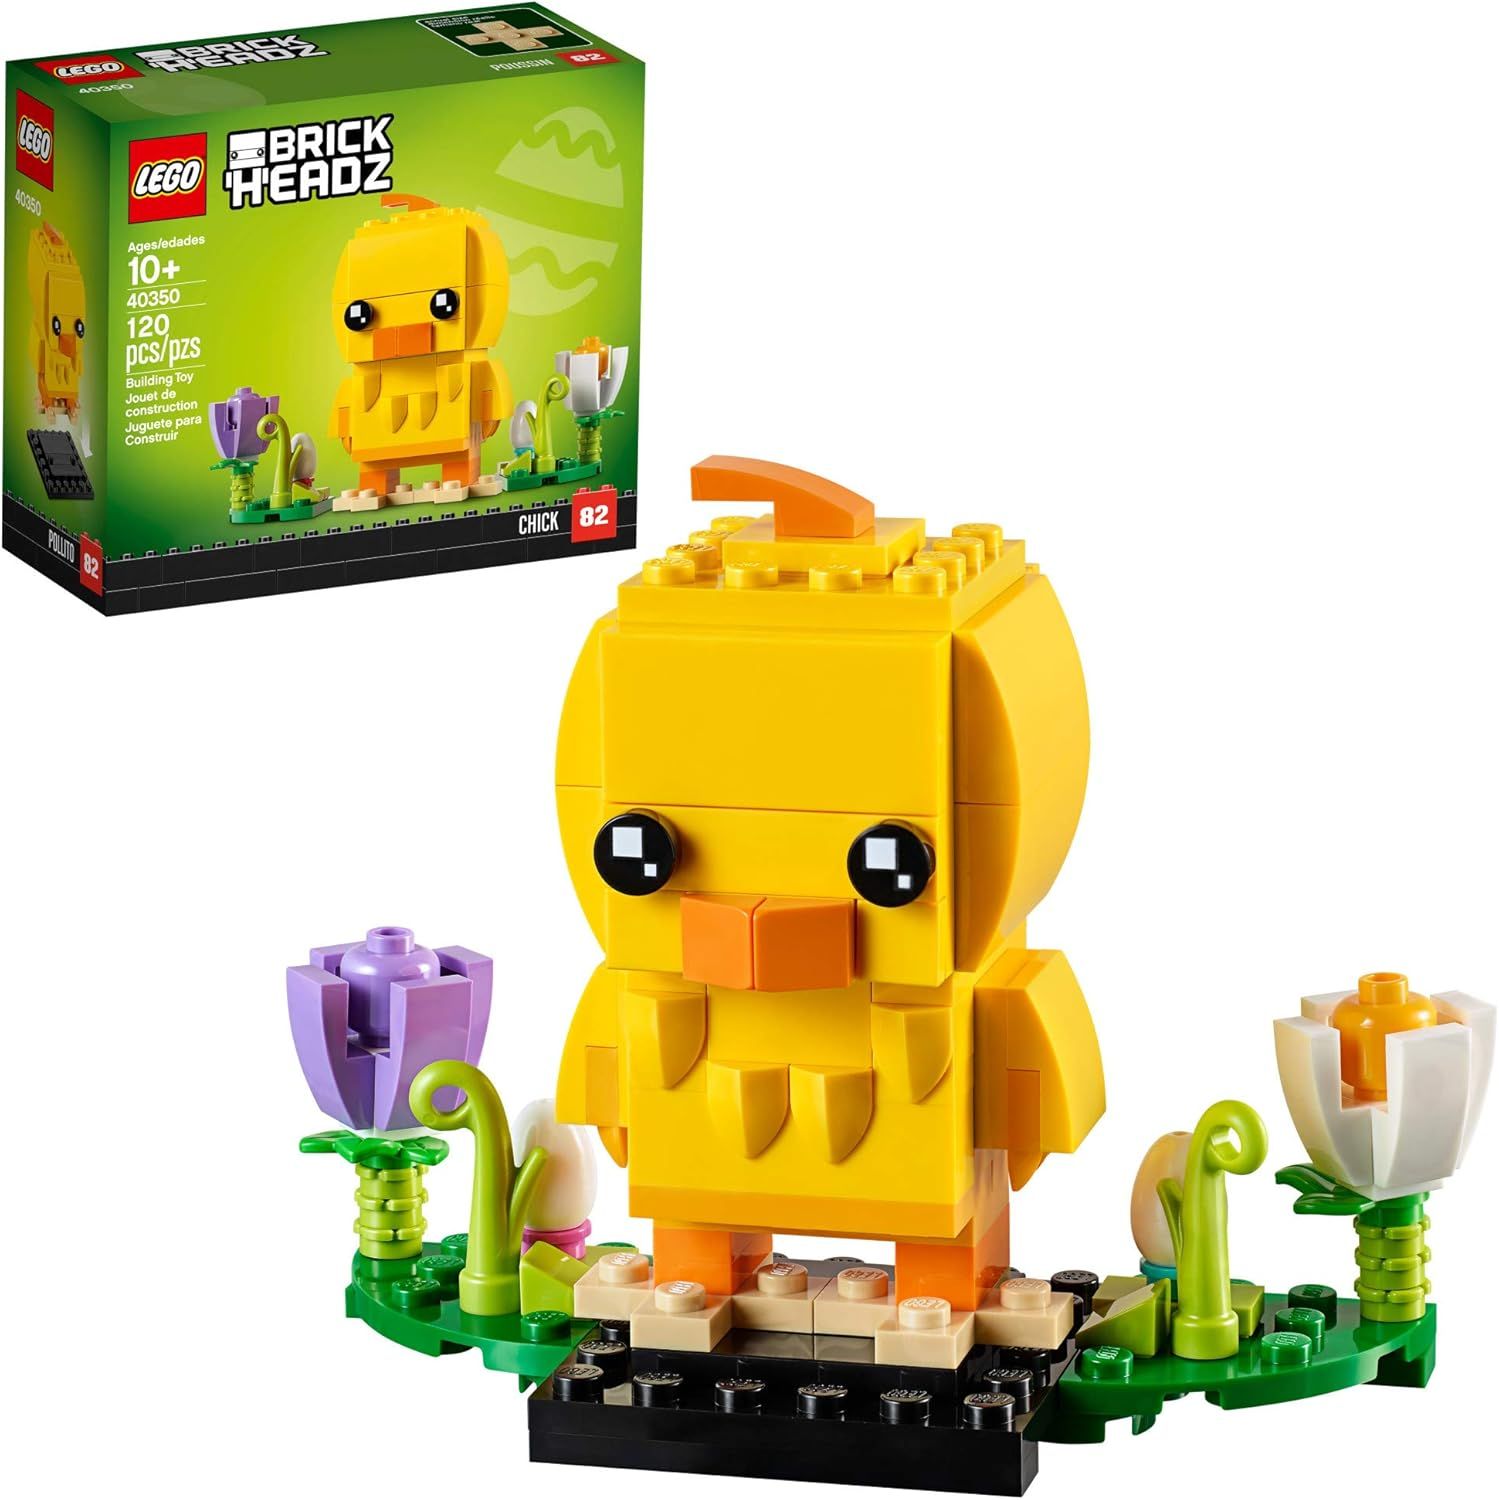 LEGO BrickHeadz 40350 Easter Chick Building Kit (120 Pieces) | Amazon (US)